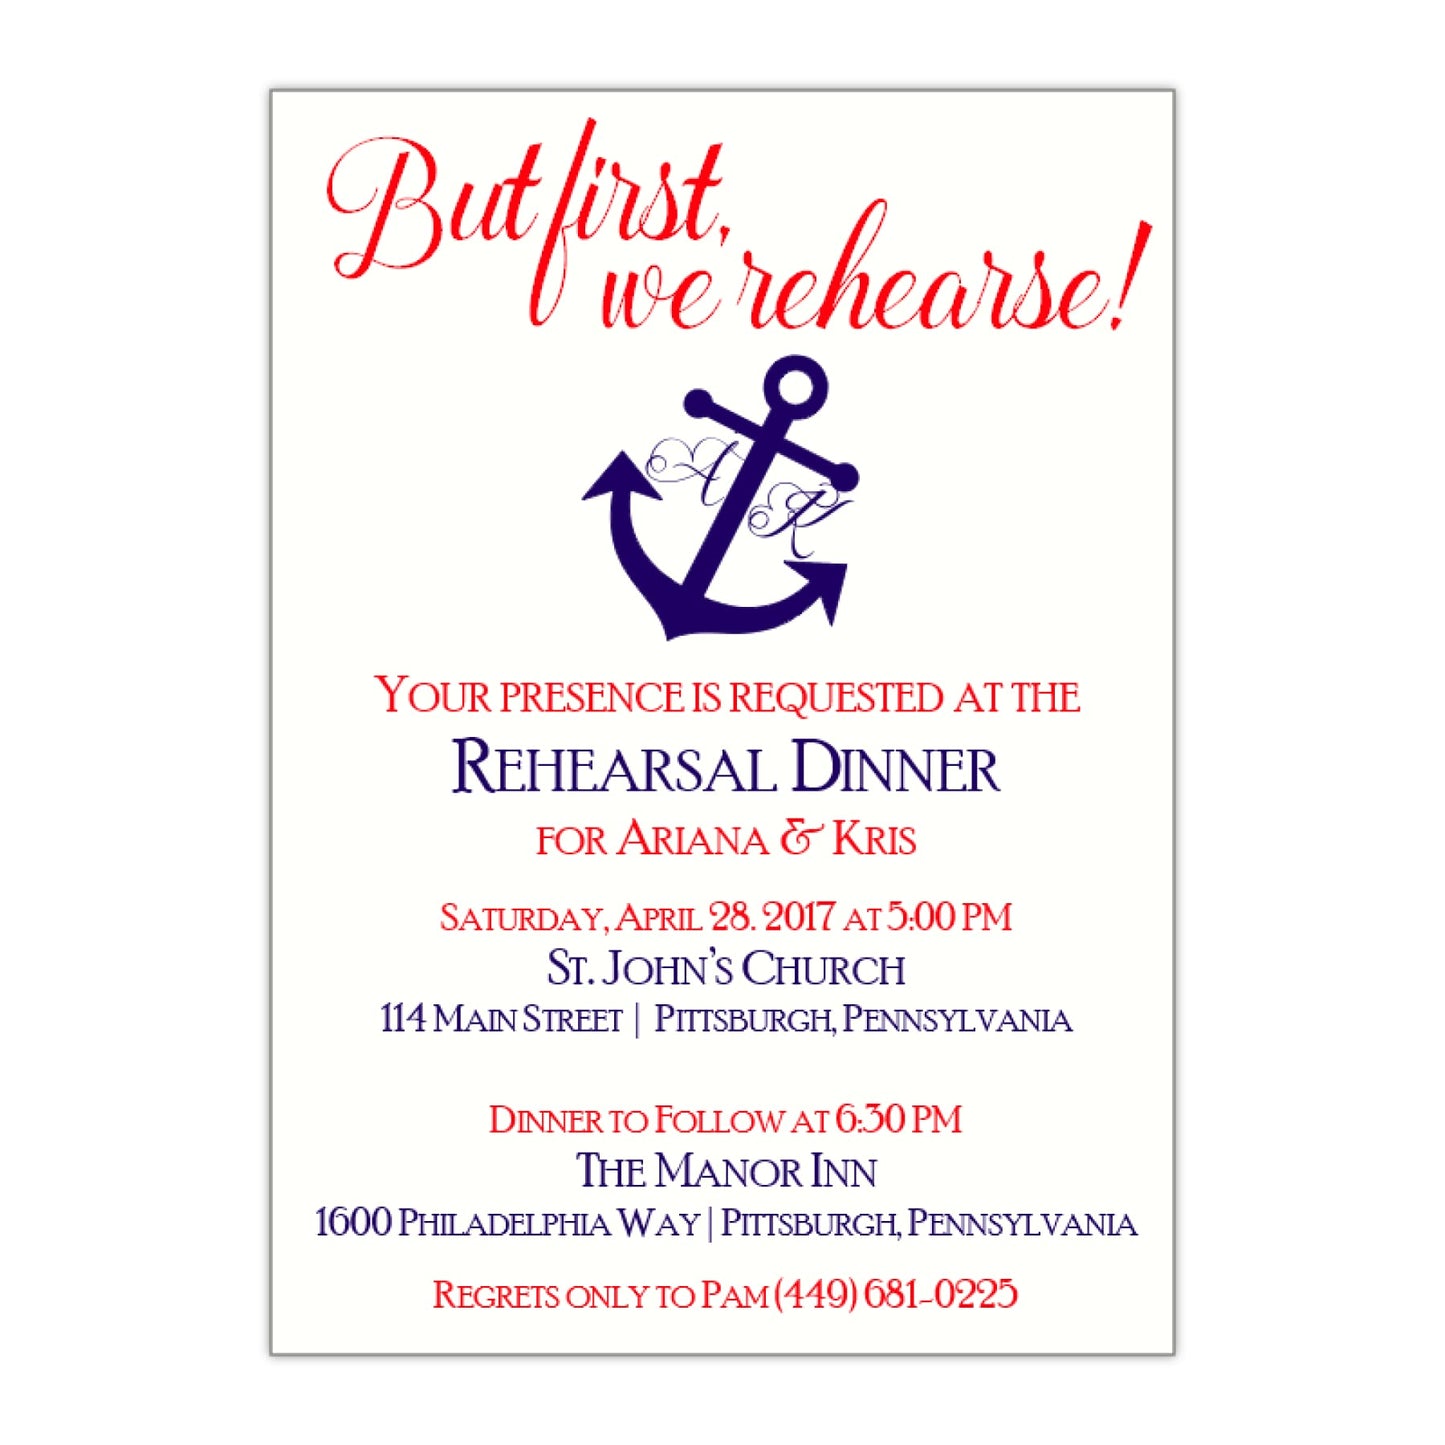 Nautical Rehearsal Dinner Invitation - All That Glitters Invitations